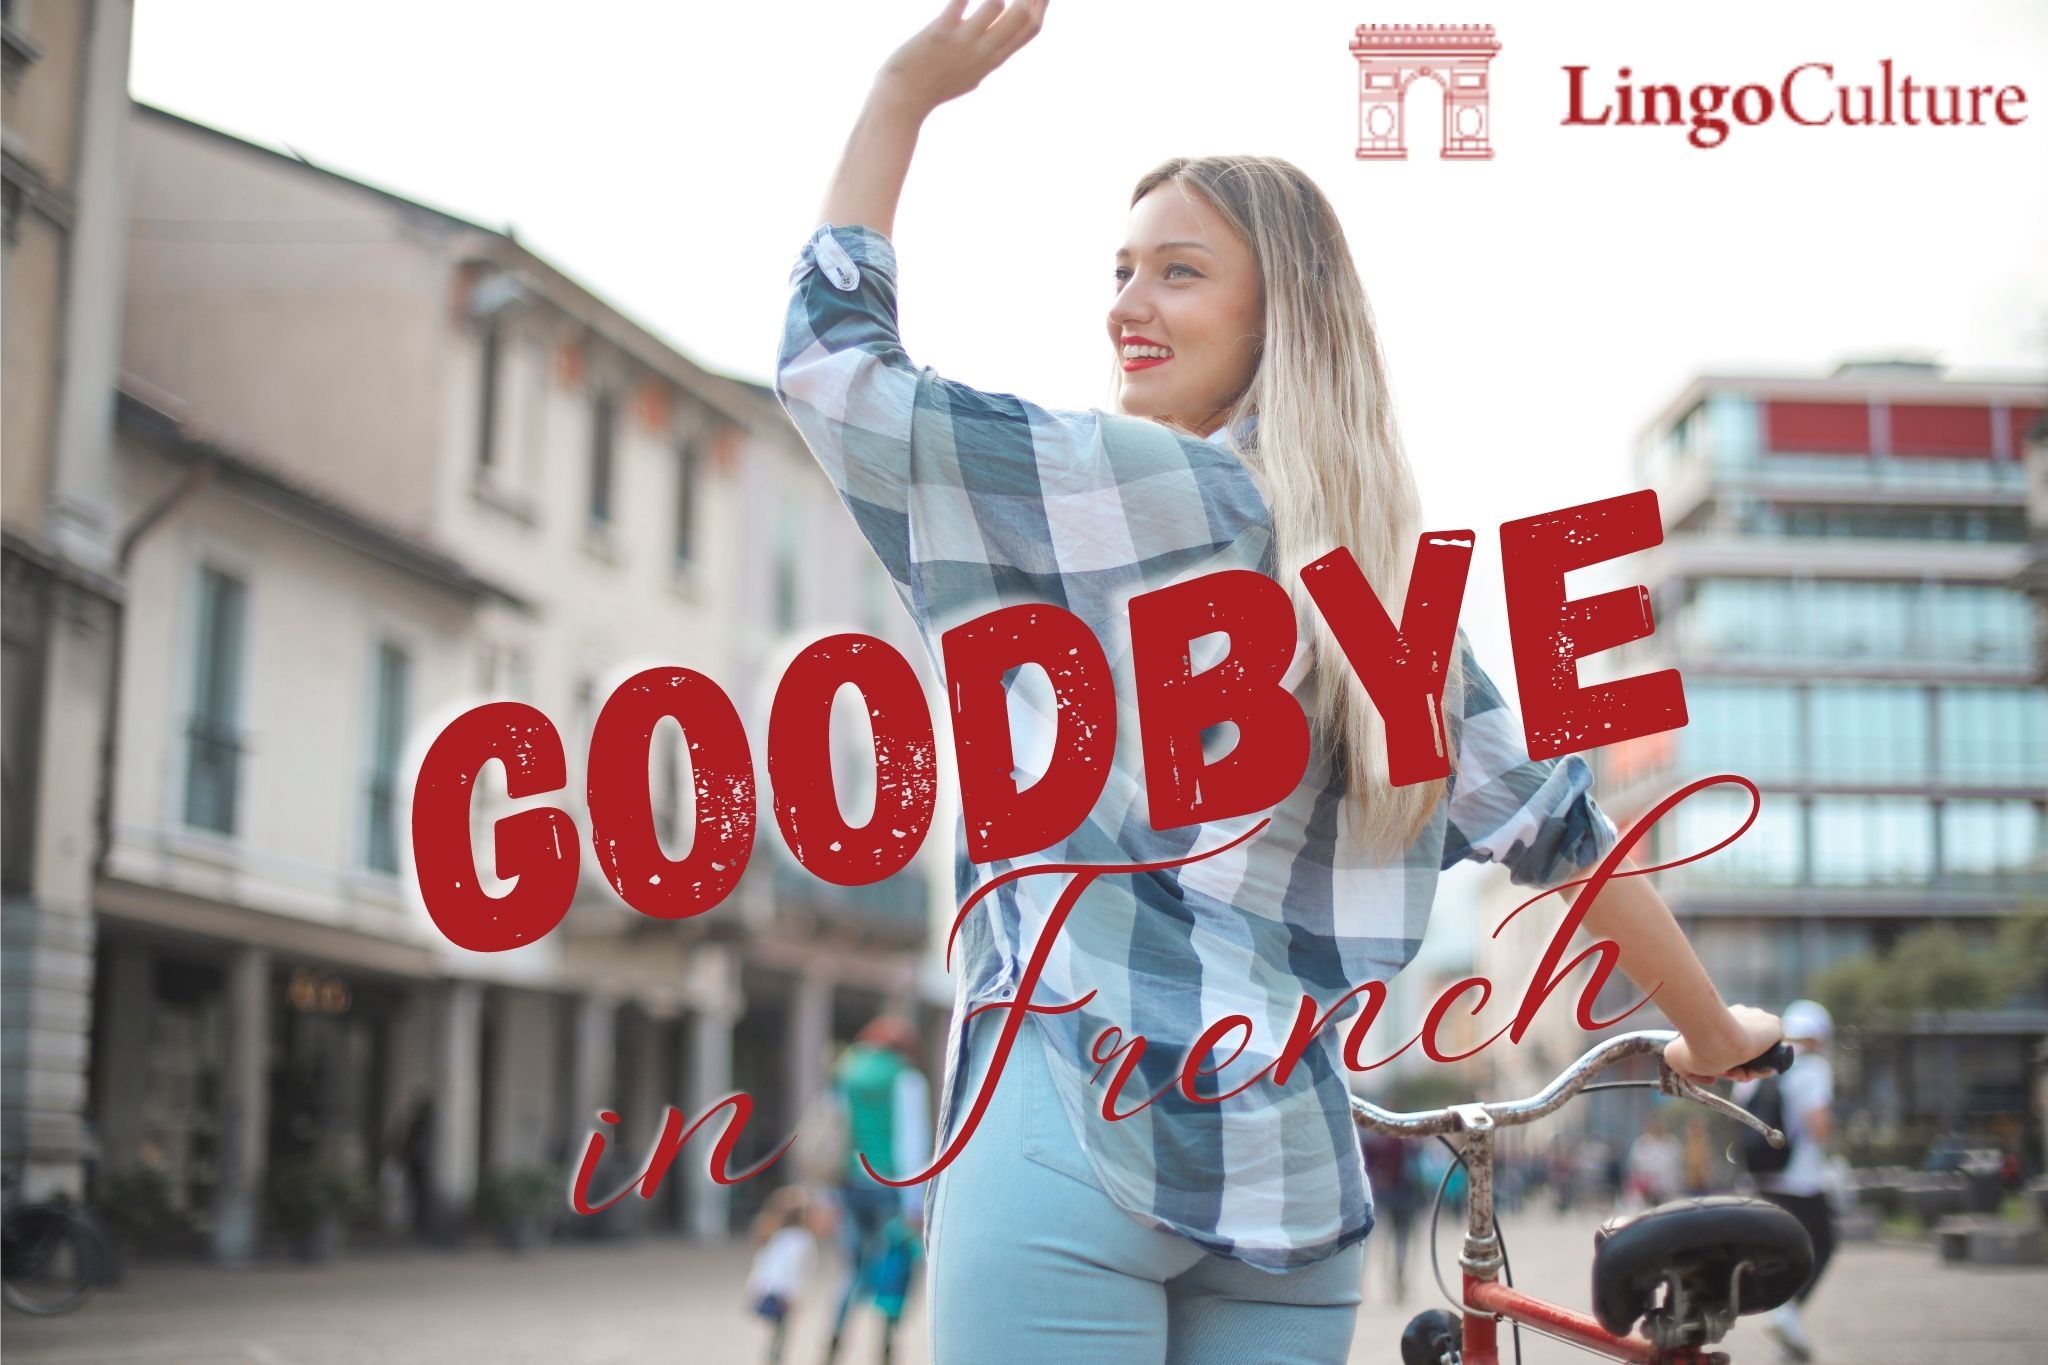 Goodbye in French